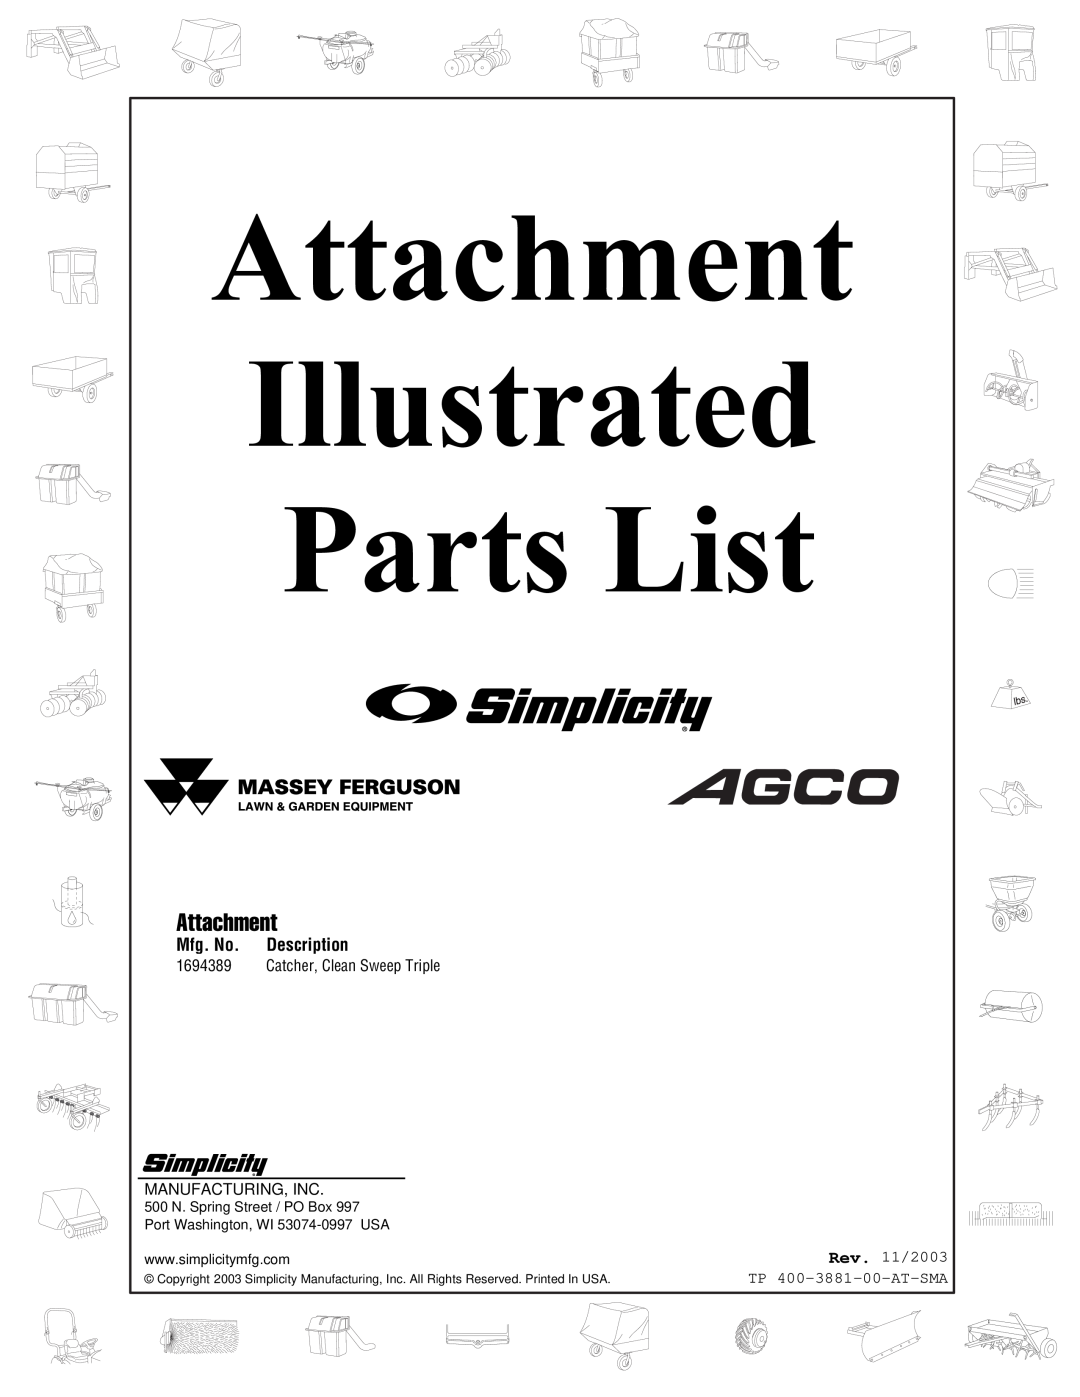 Simplicity 1694389 manual Mfg. No. Description, Rev. 11/2003, TP 400-3881-00-AT-SMA, Attachment Illustrated Parts List 